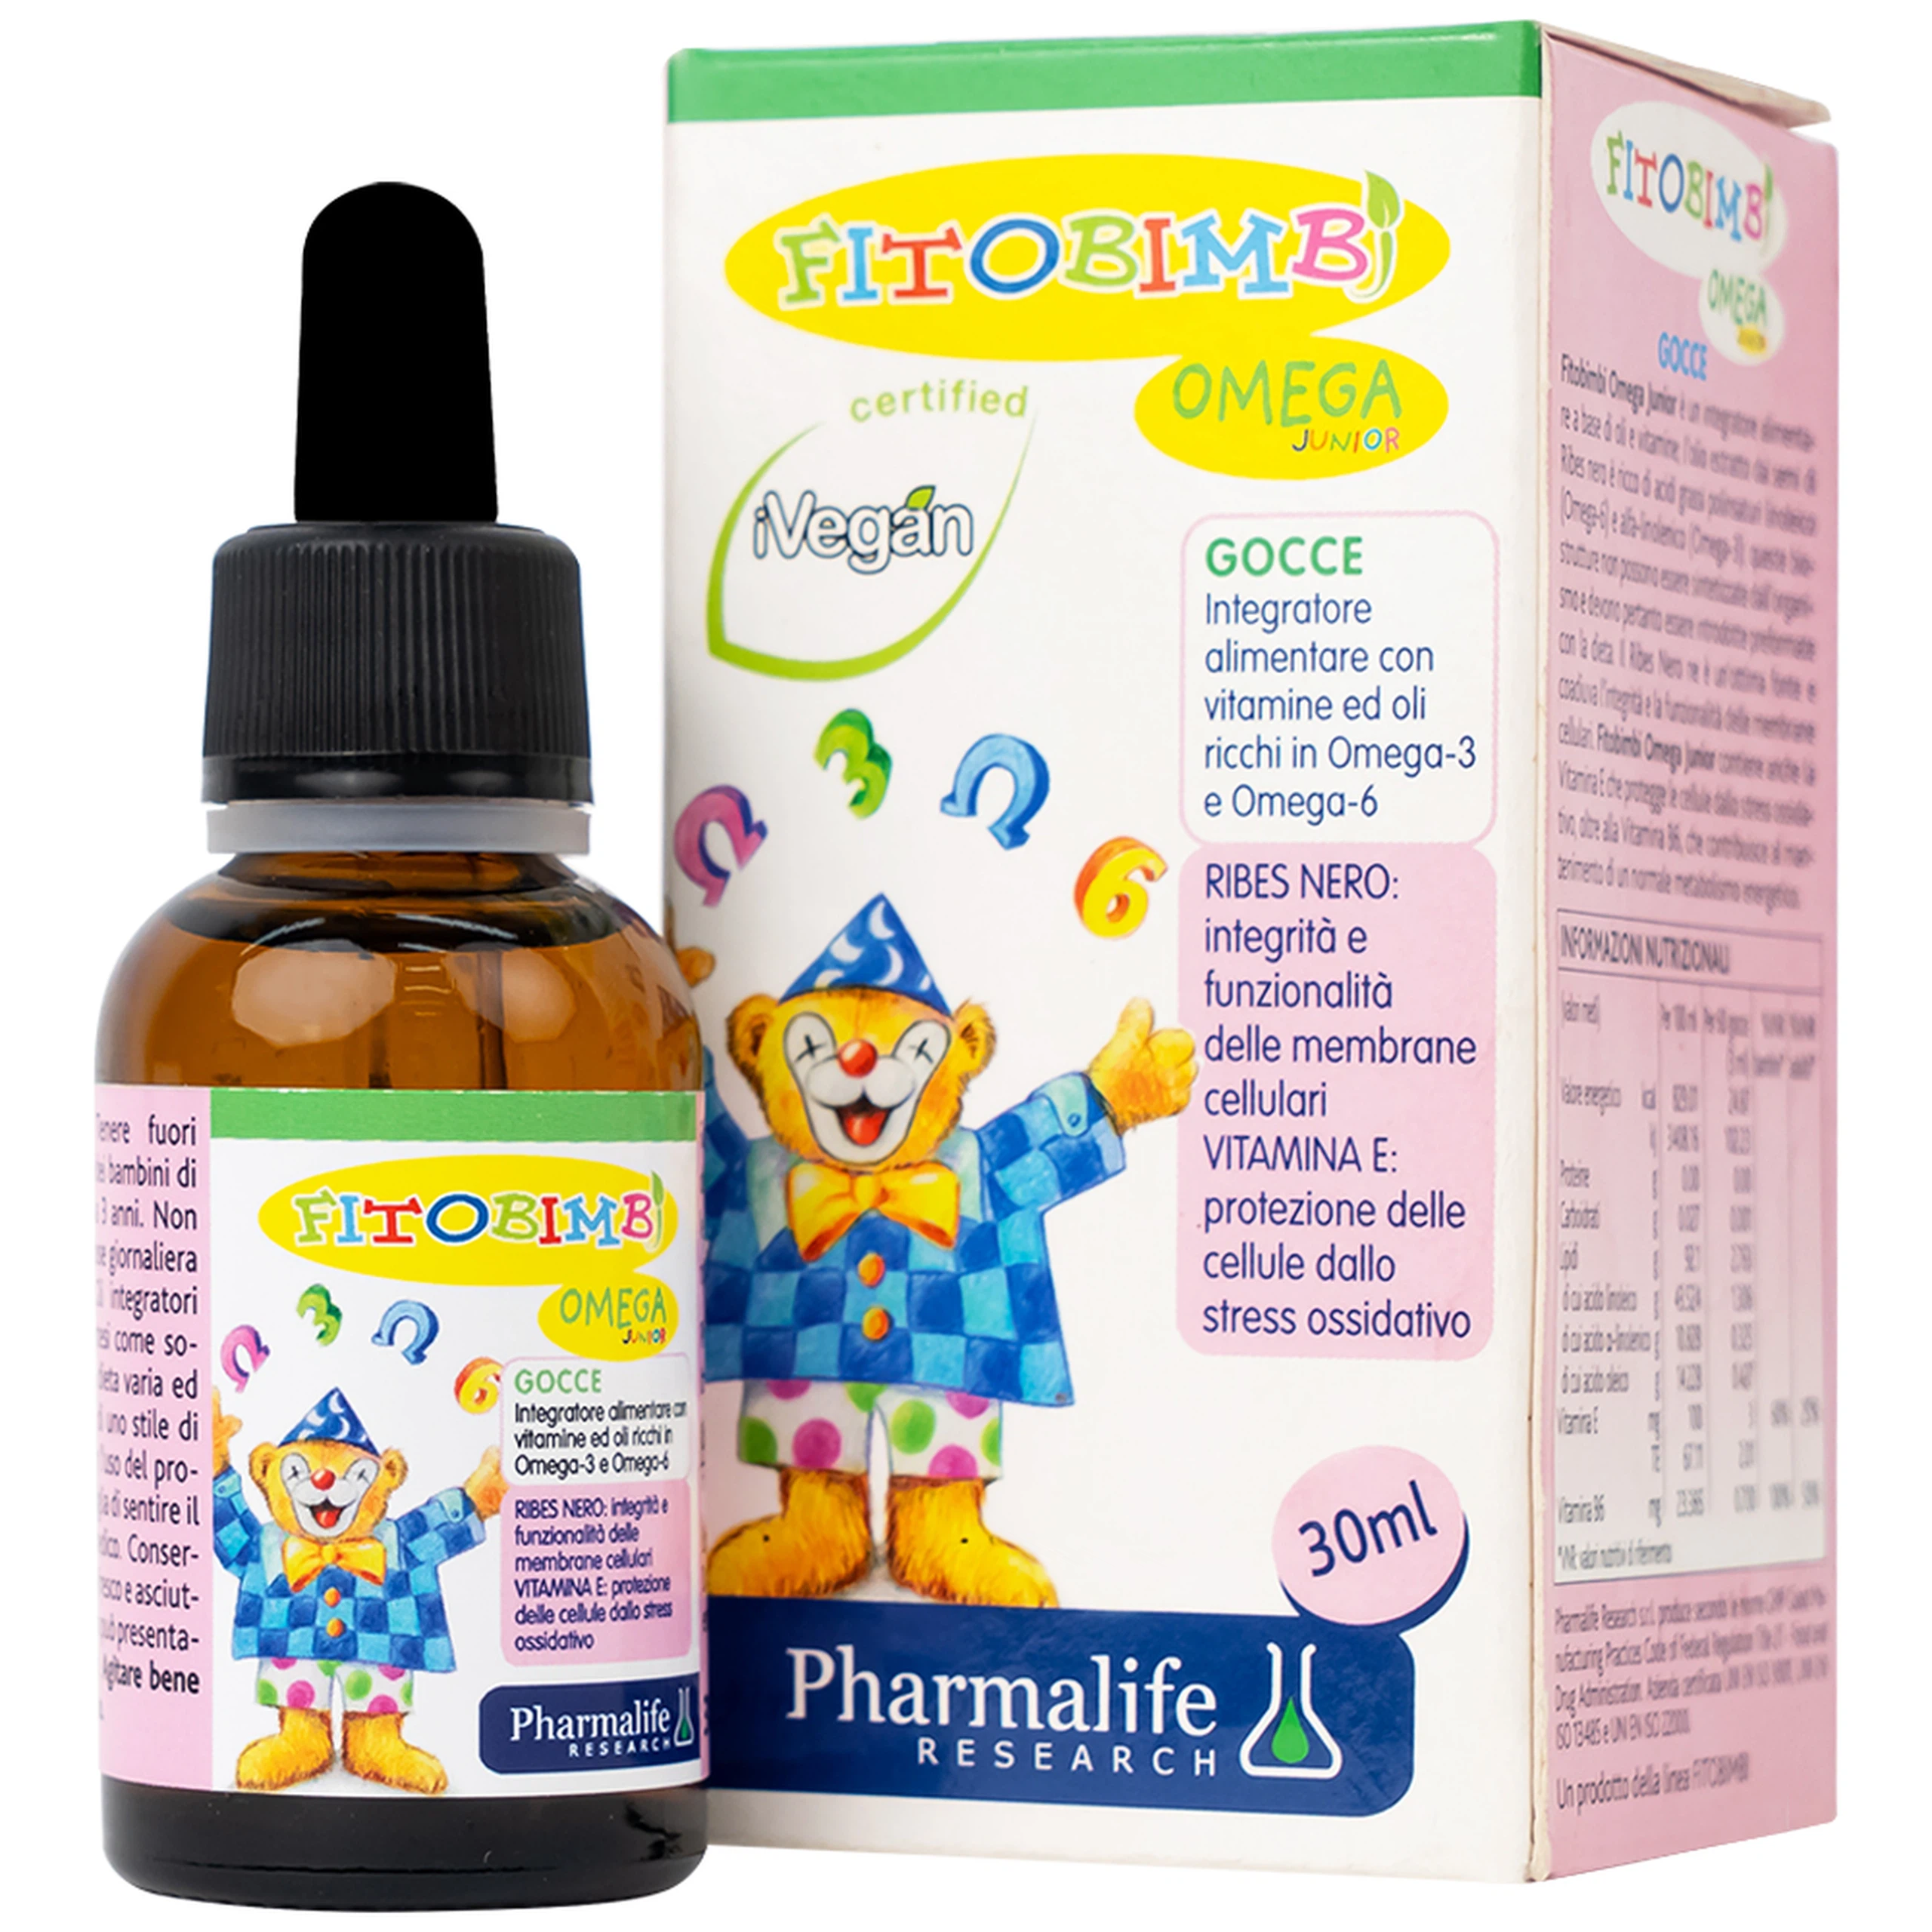 Siro Fitobimbi Omega Junior Gocce Pharmalife bổ sung acid béo không no Omega-3, Omega-6 (30ml)